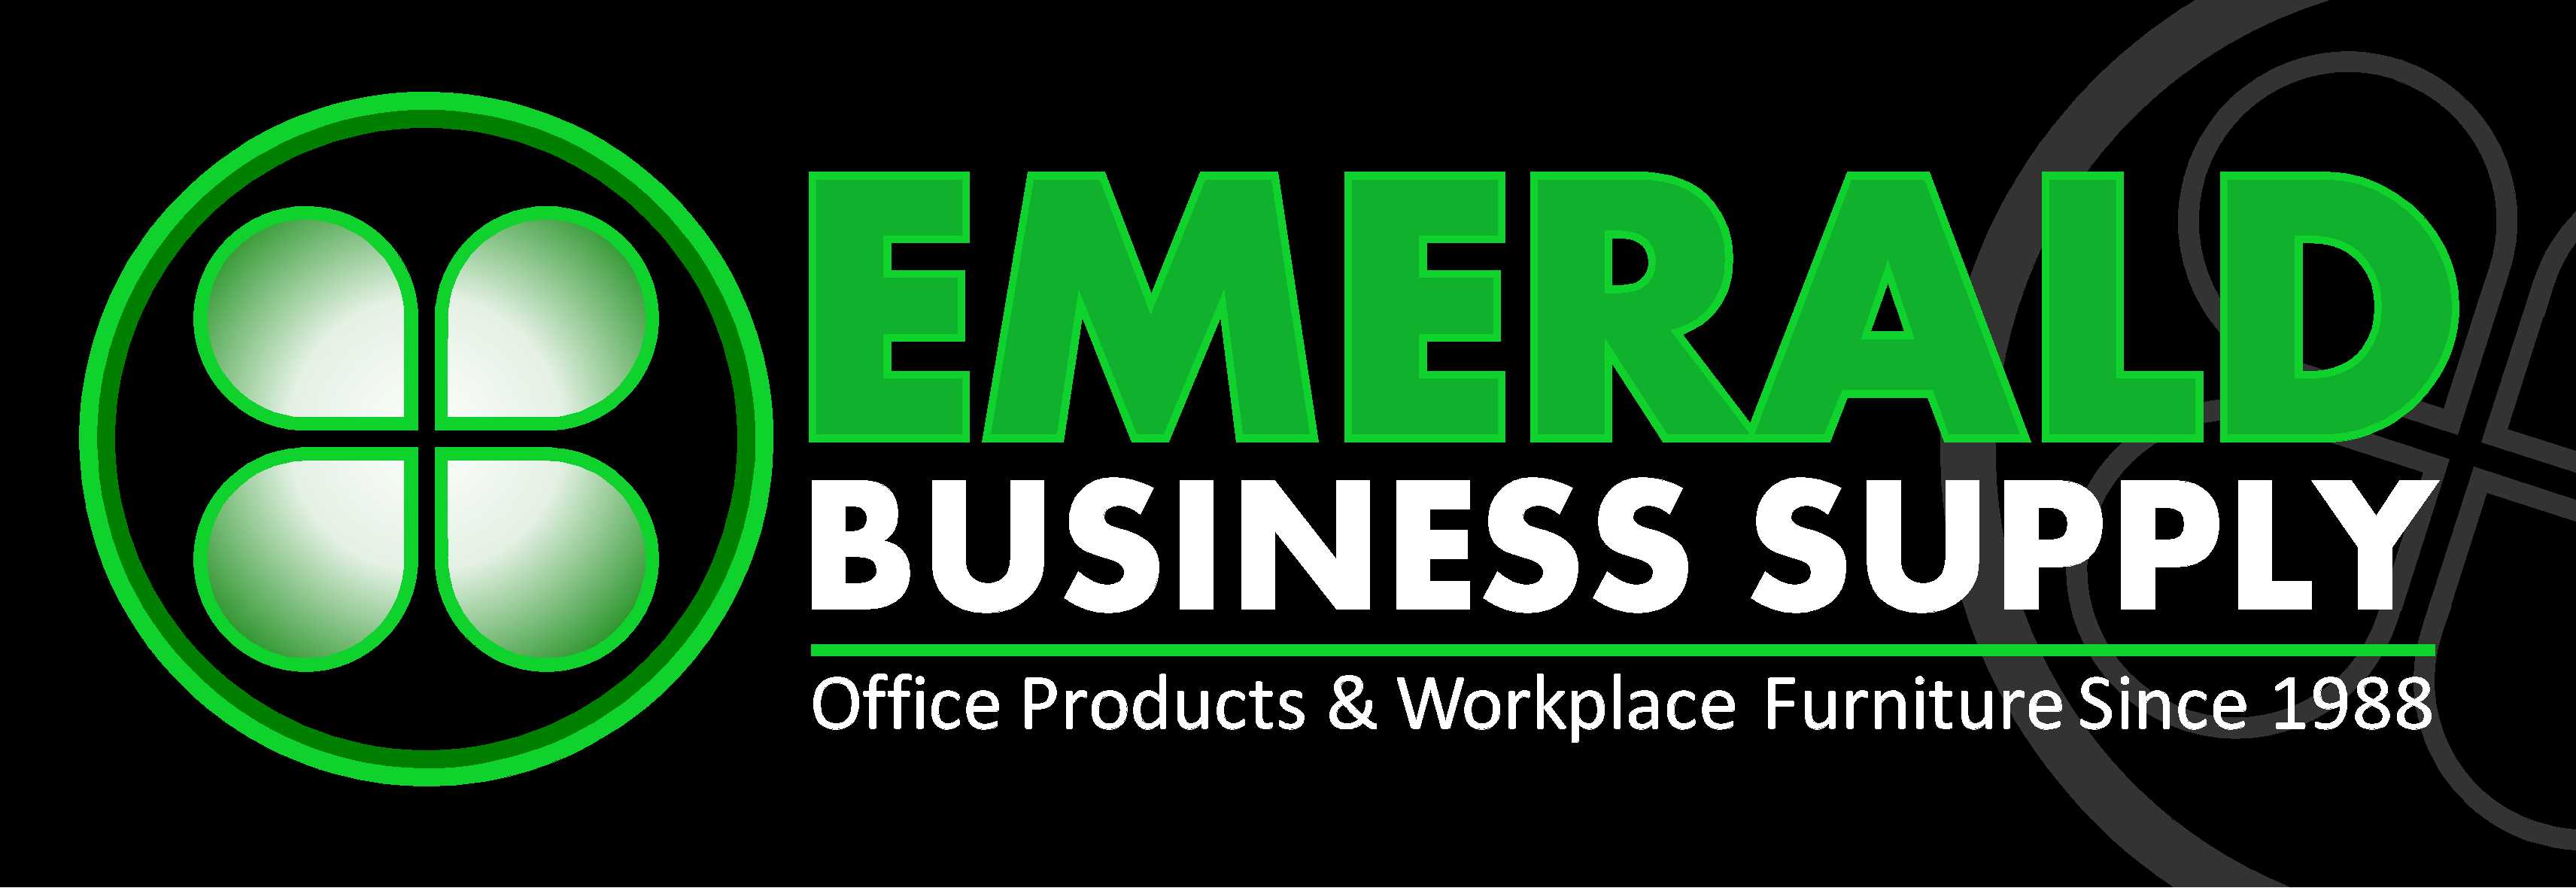 Emerald Business Supply, Inc.